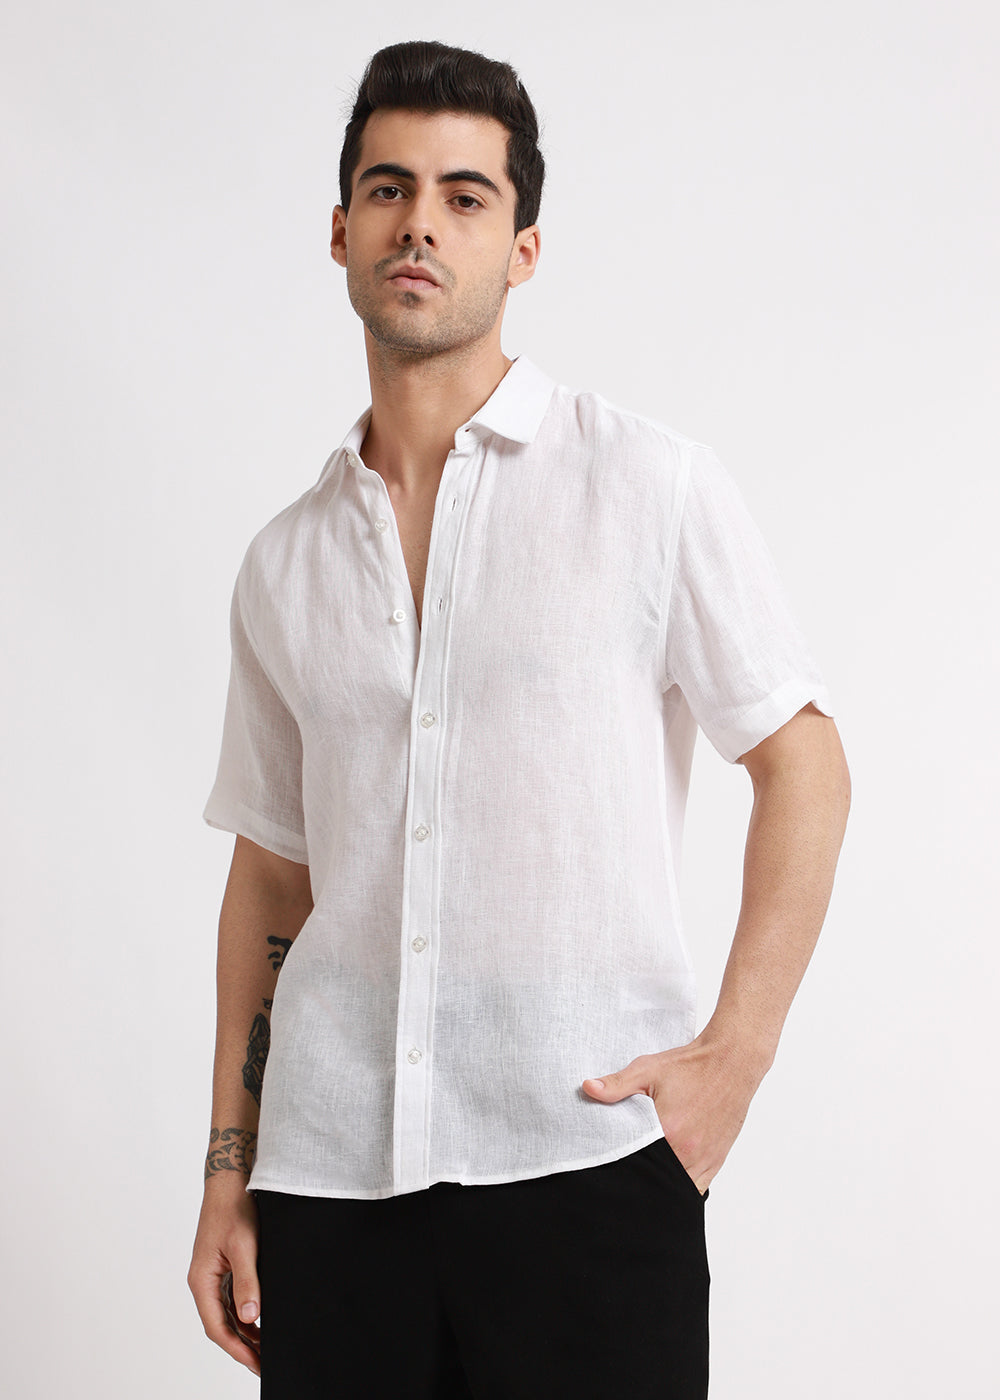 Shop Batiste White Linen shirts